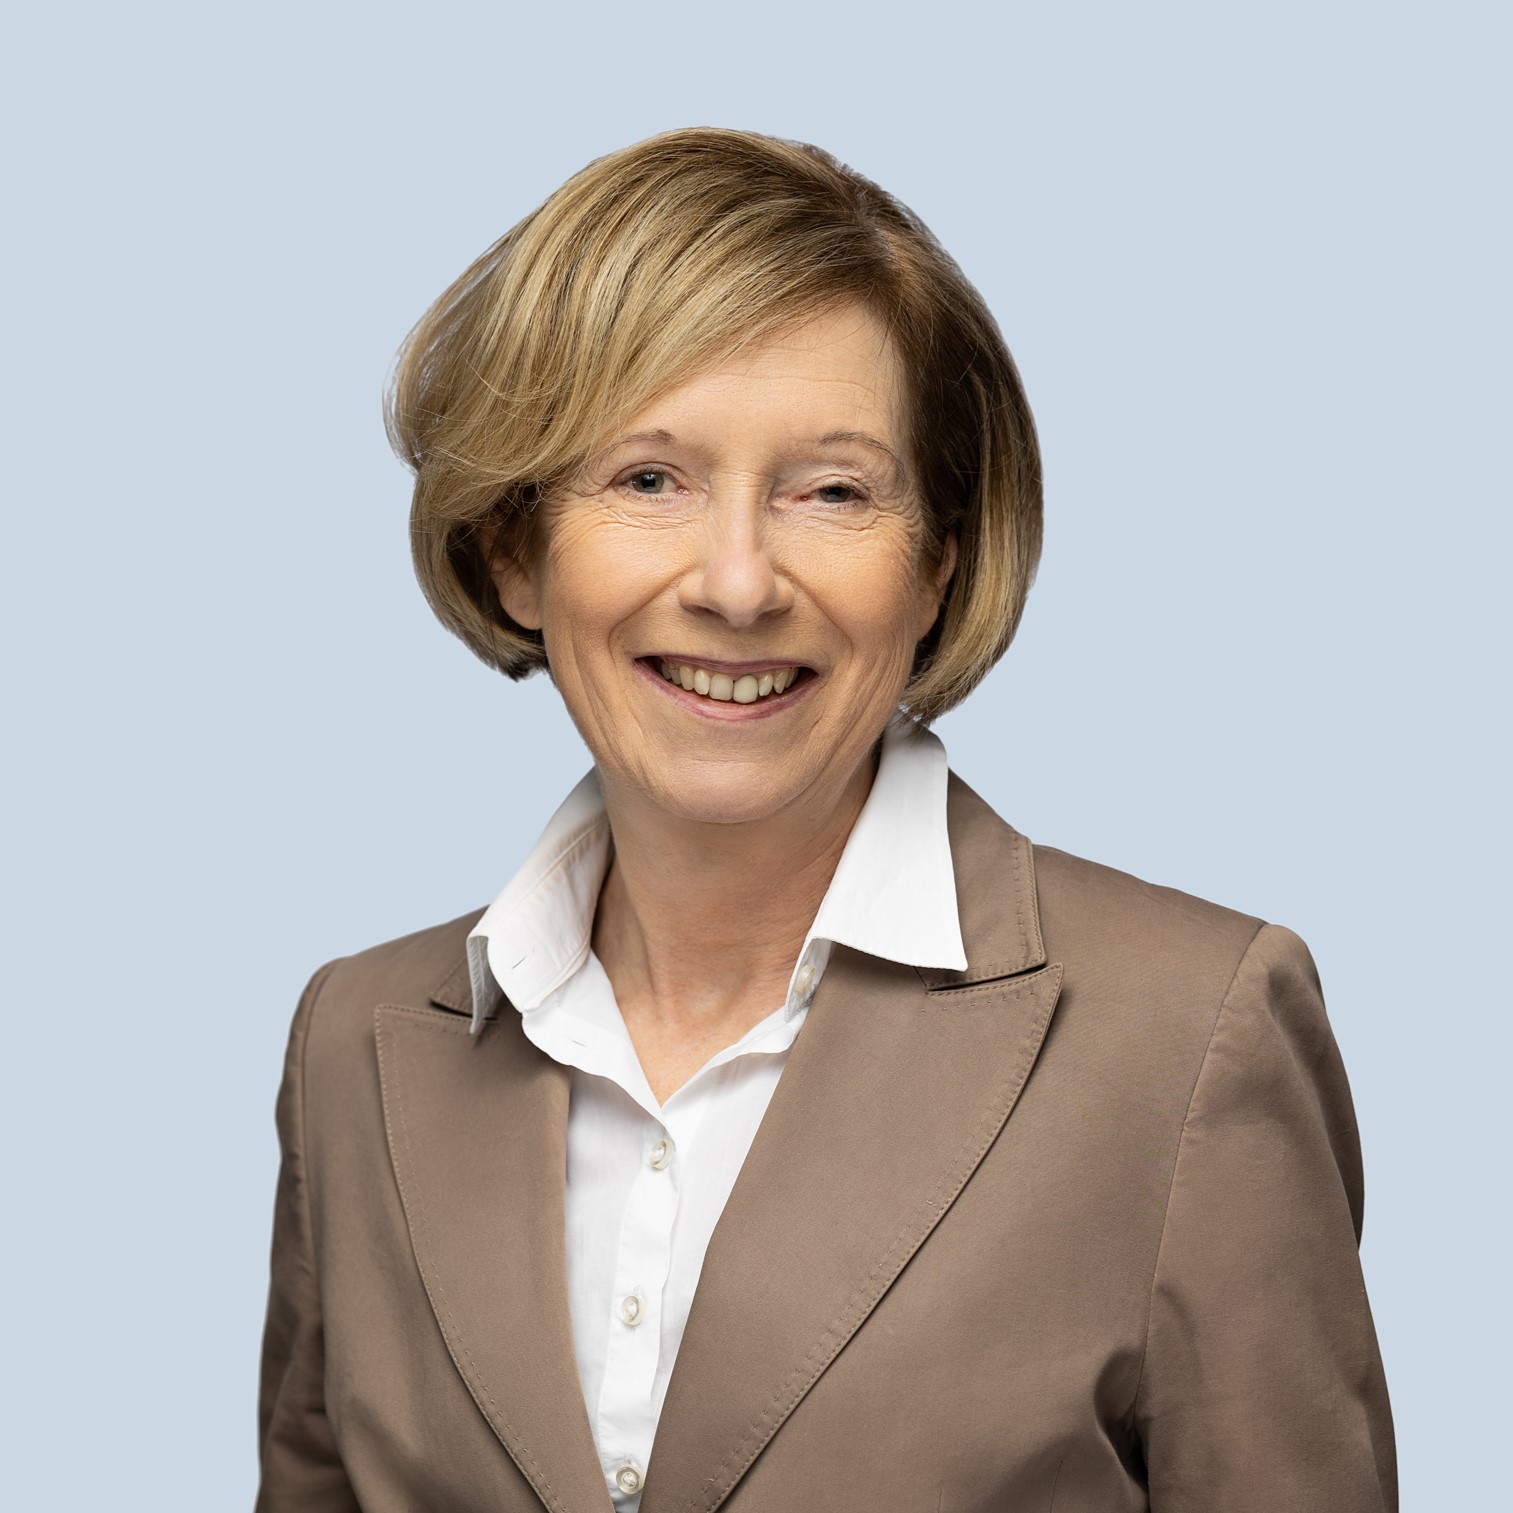 Dr. Andrea Tschirf-Kainberger